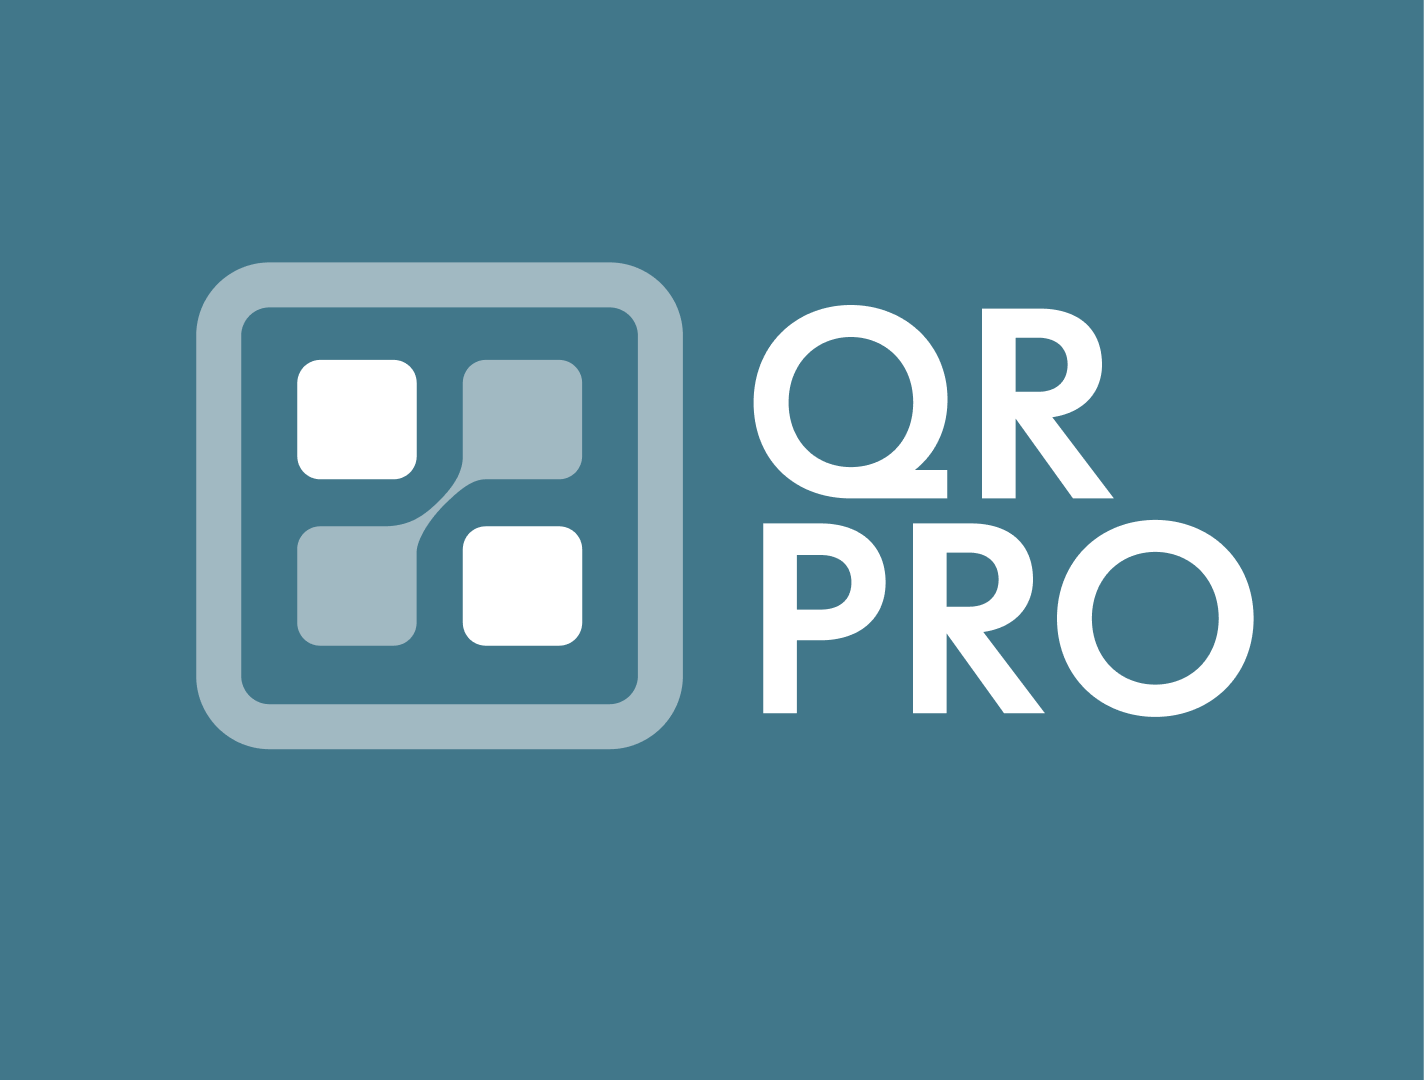 QRPRO logo small